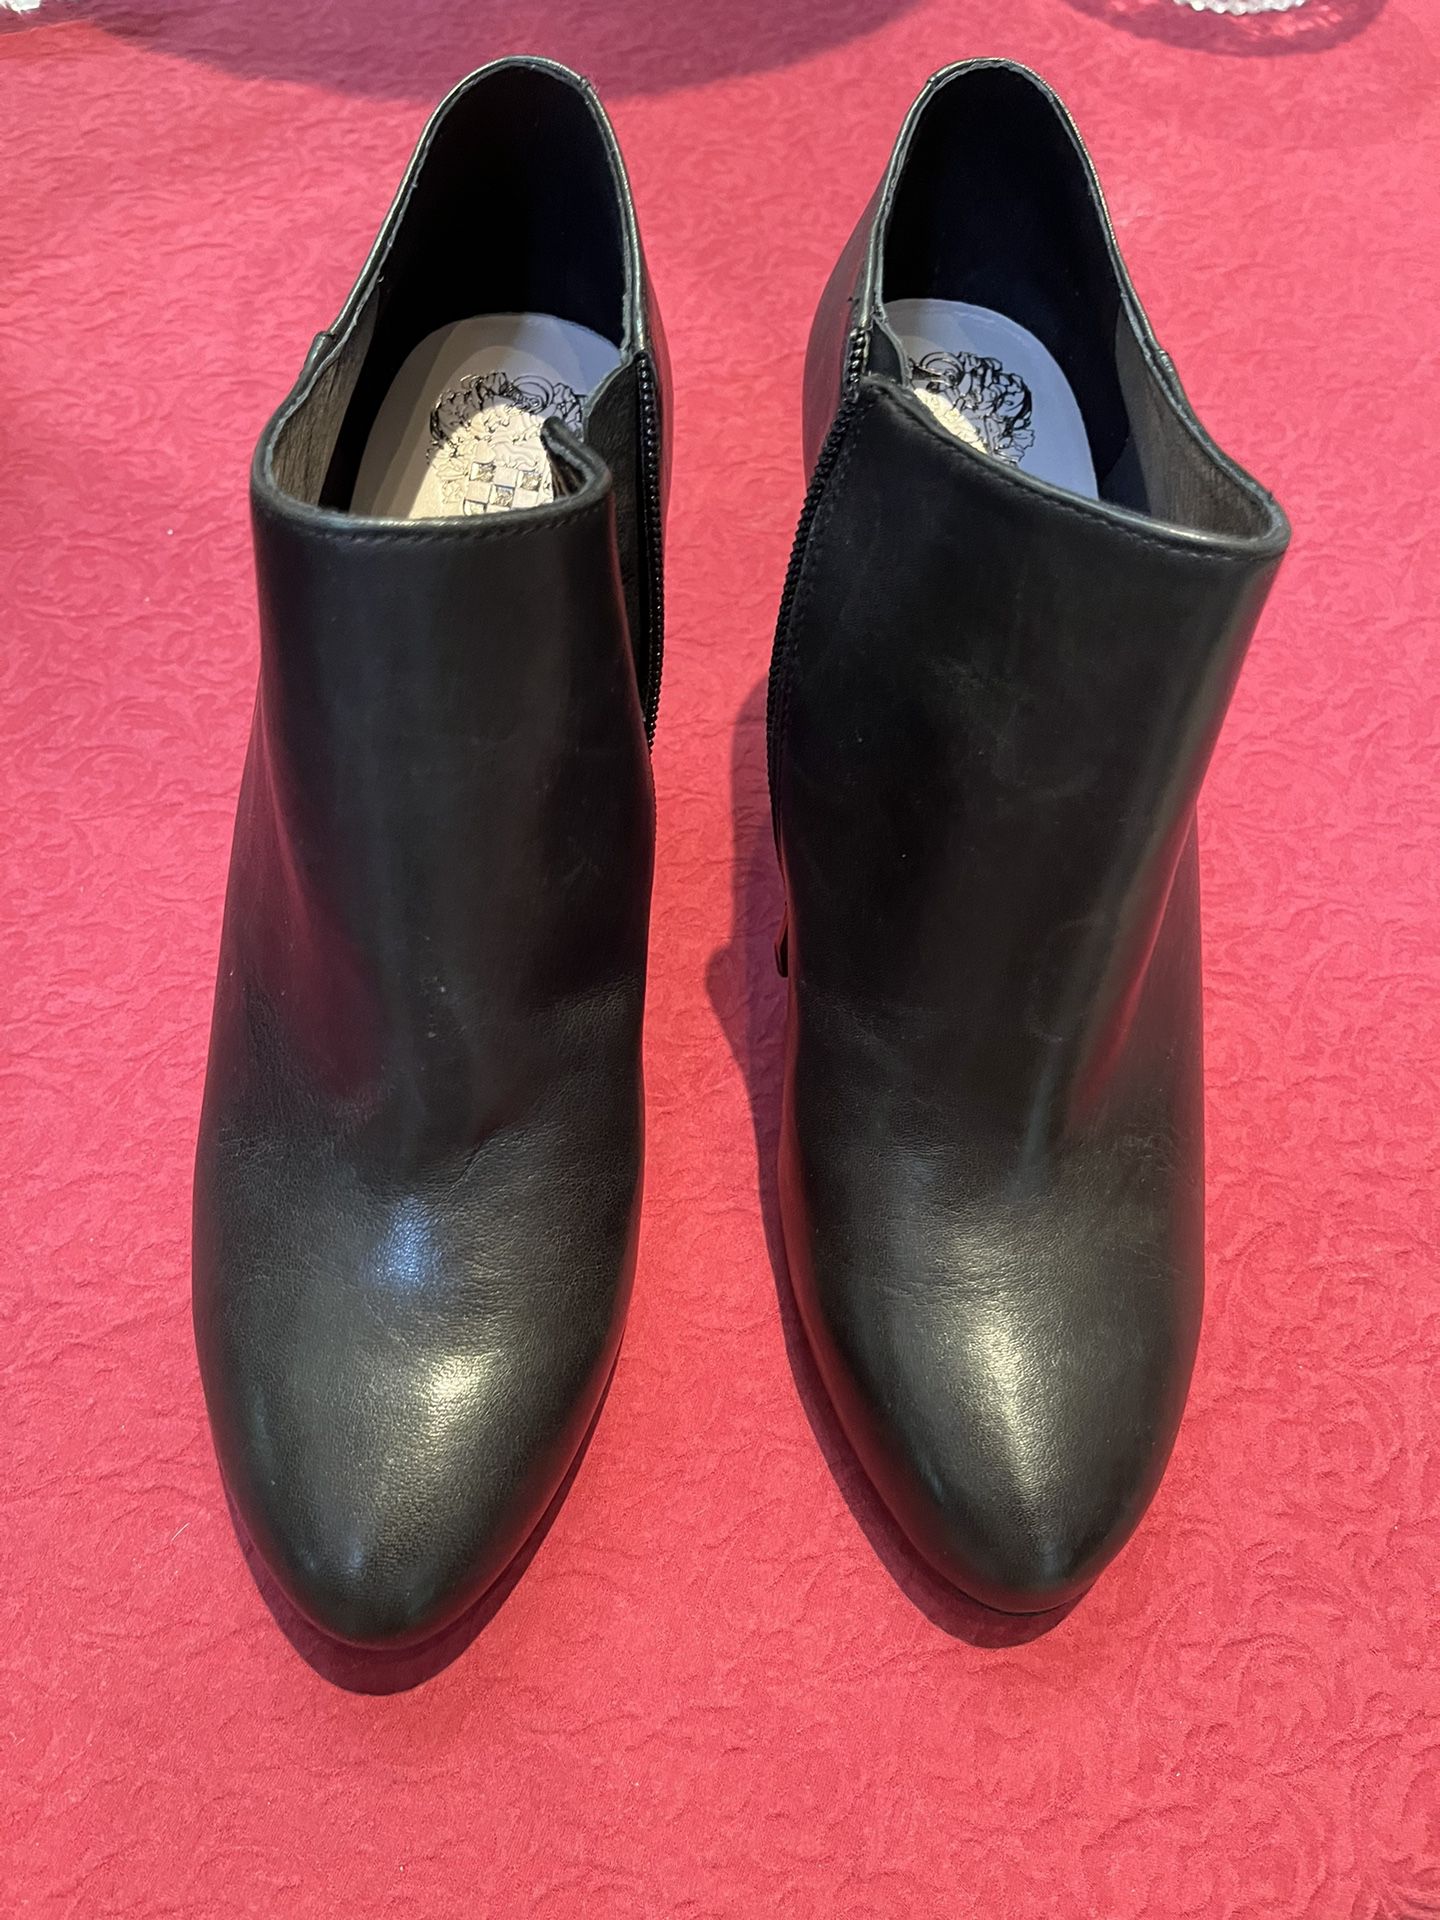 Vince Camuto VC-Vive Black Nappa black leather pump Bootie heels